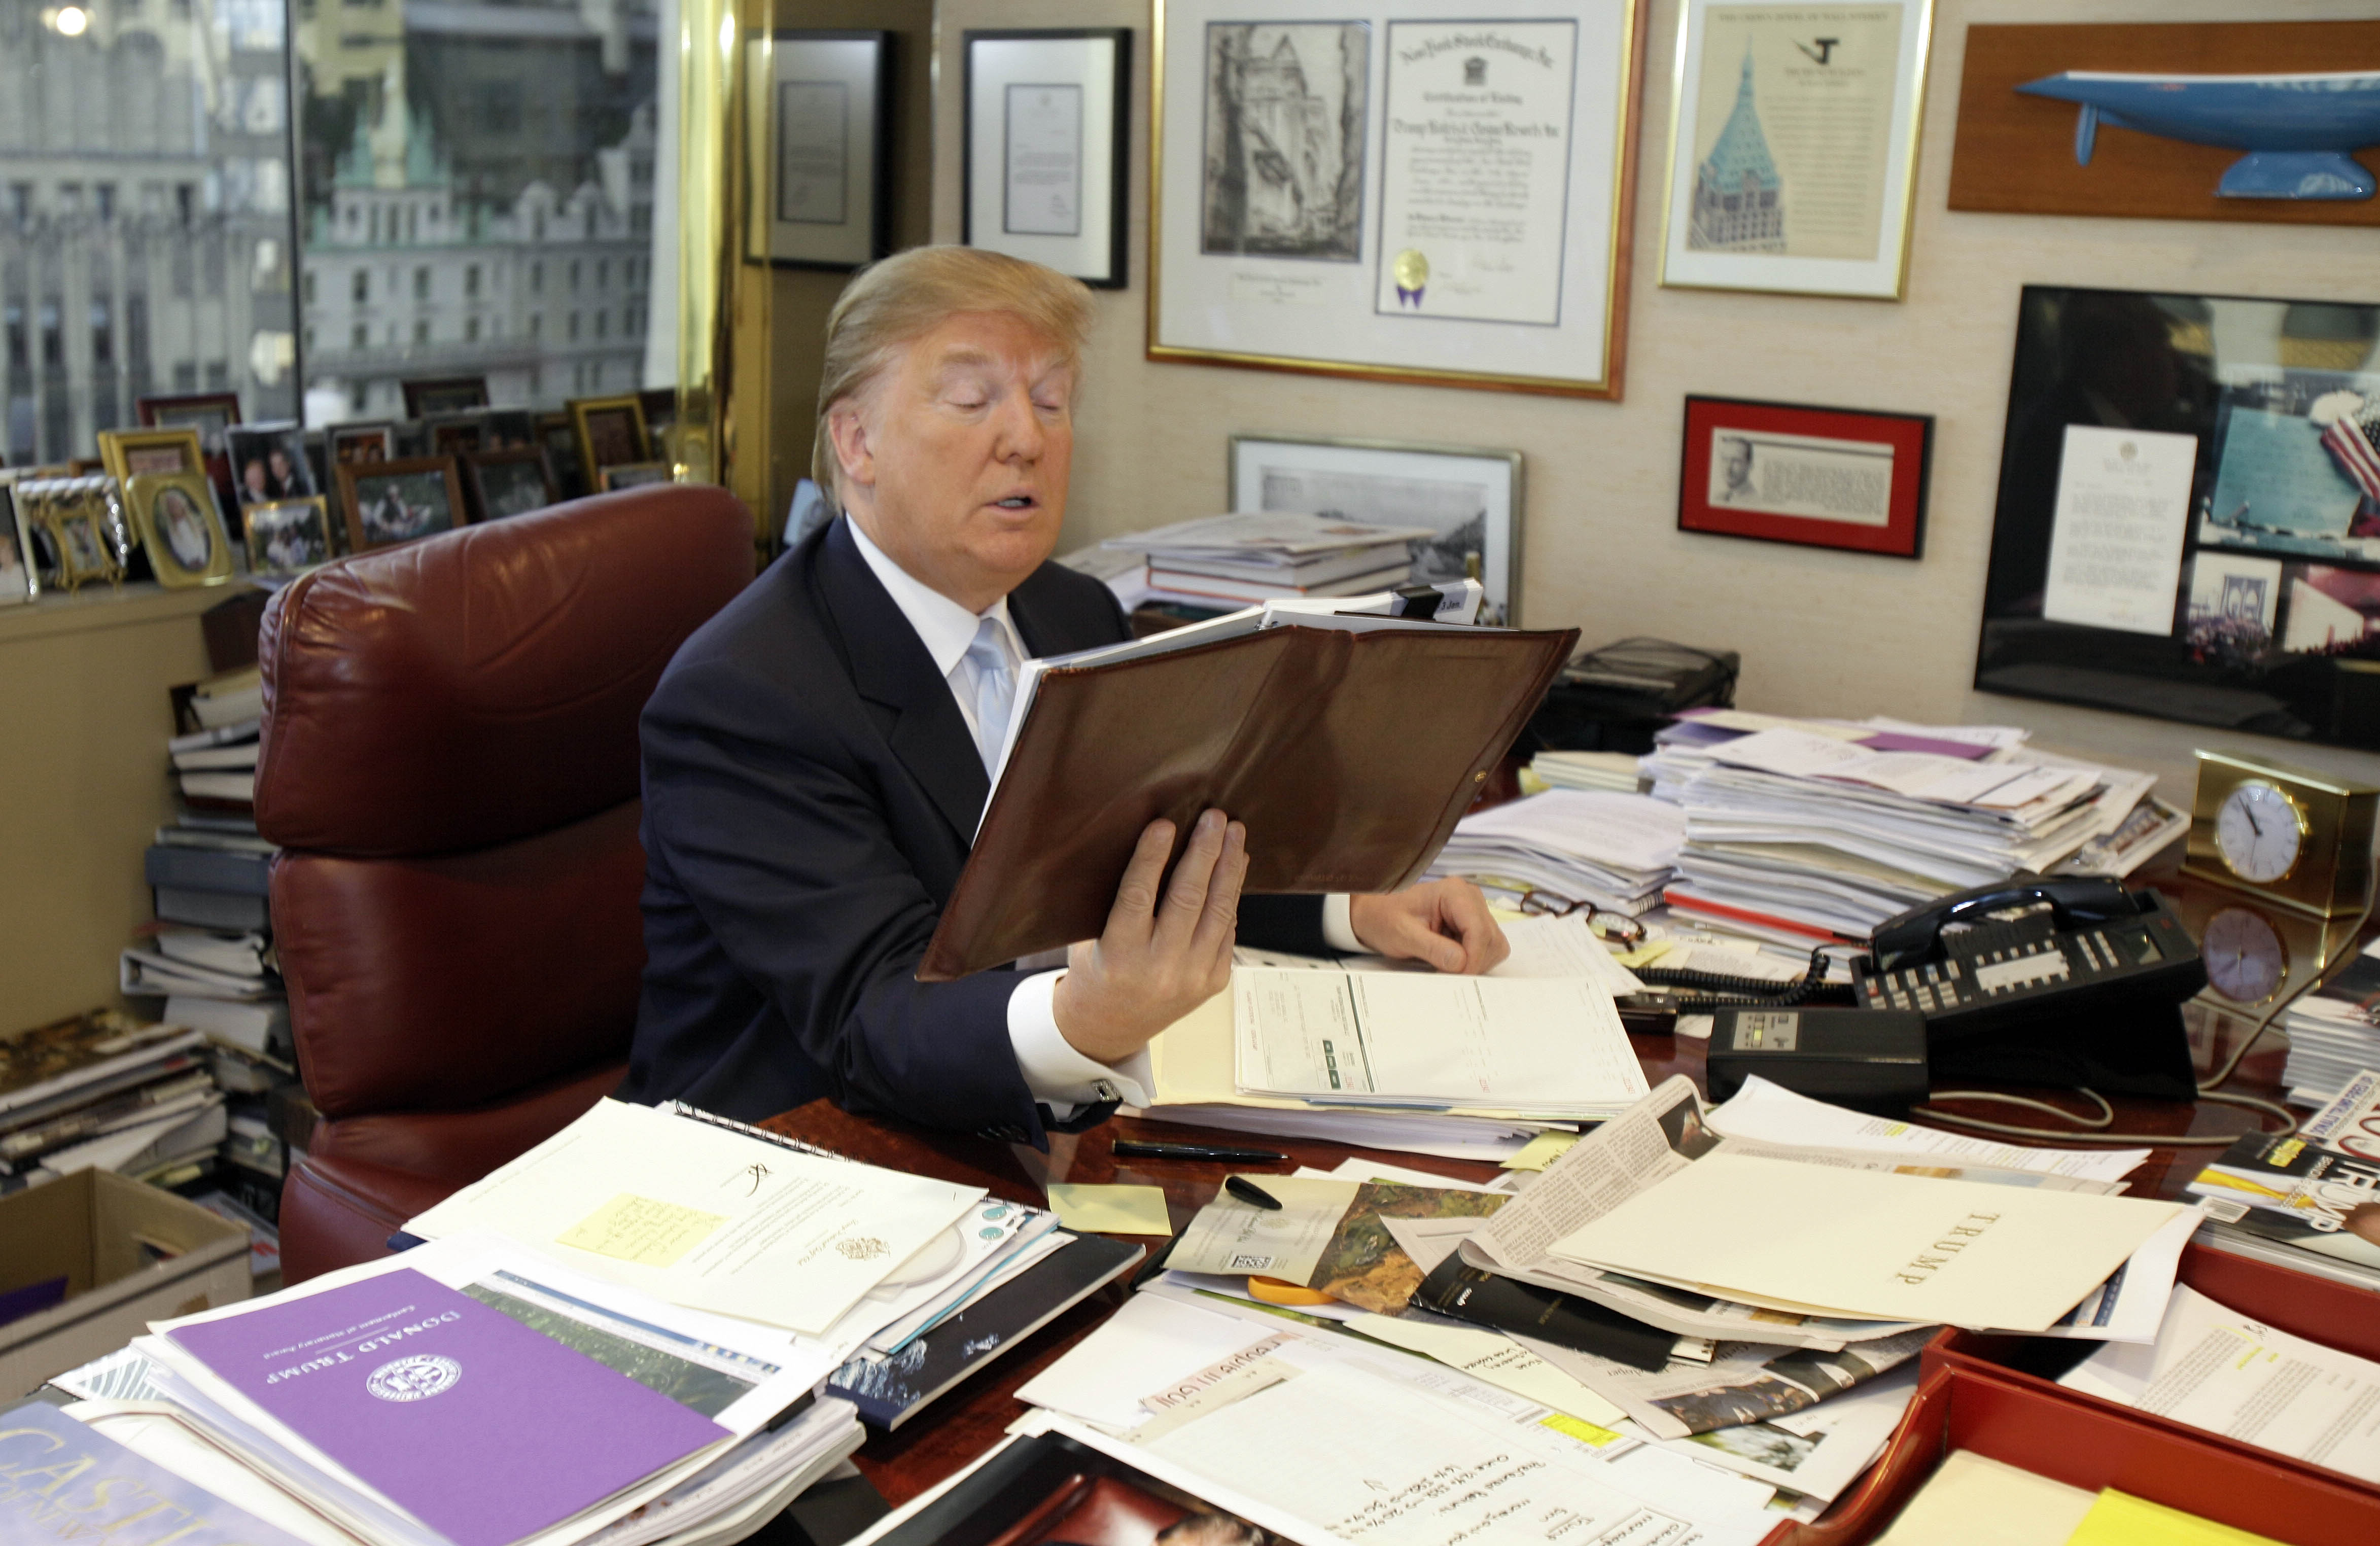 Donald Trump messy desk